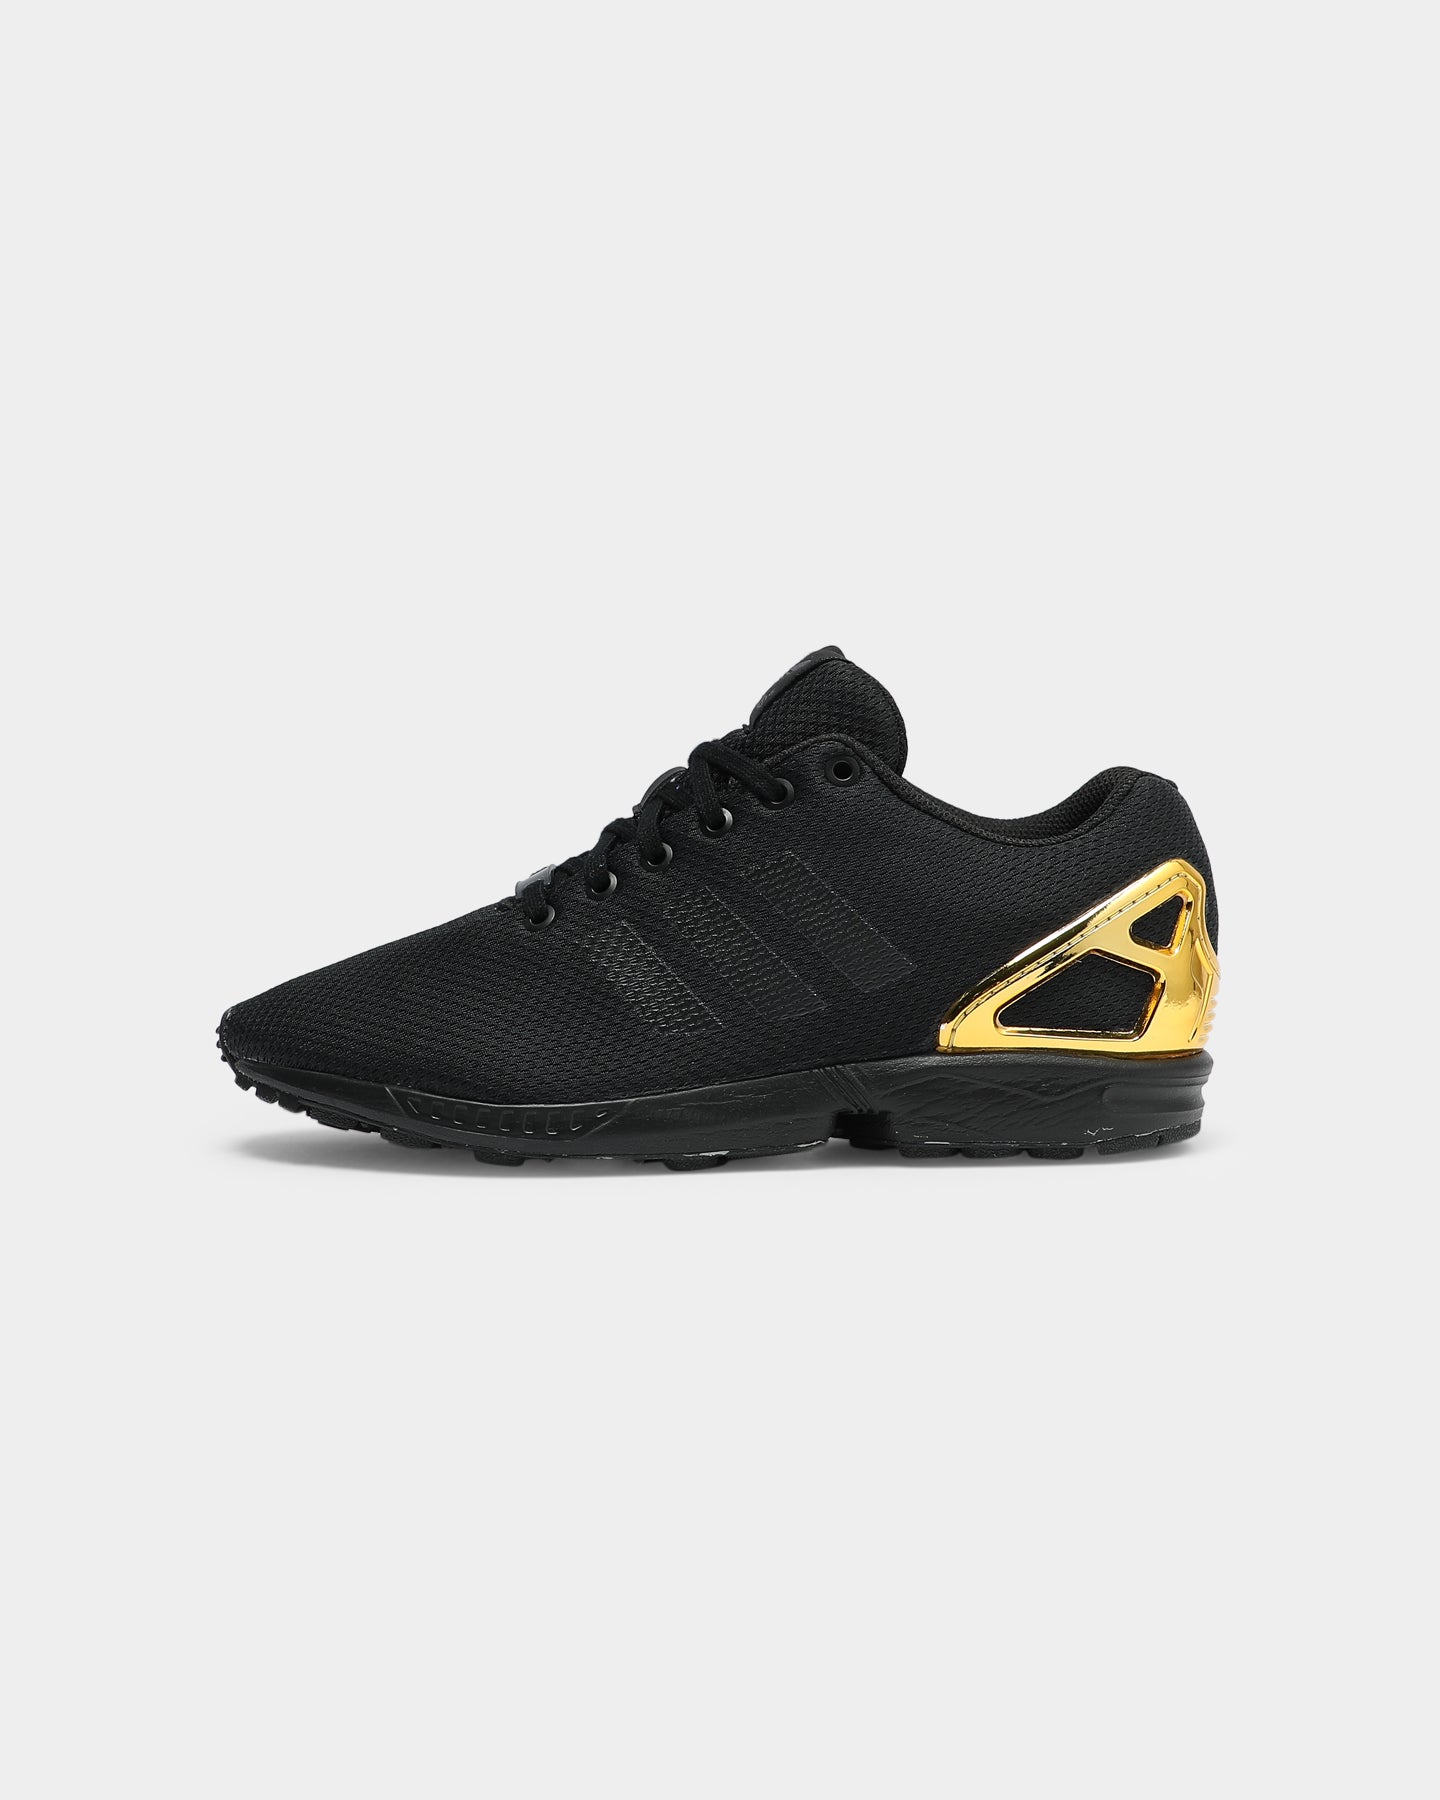 adidas zx flux torsion black and gold shoes